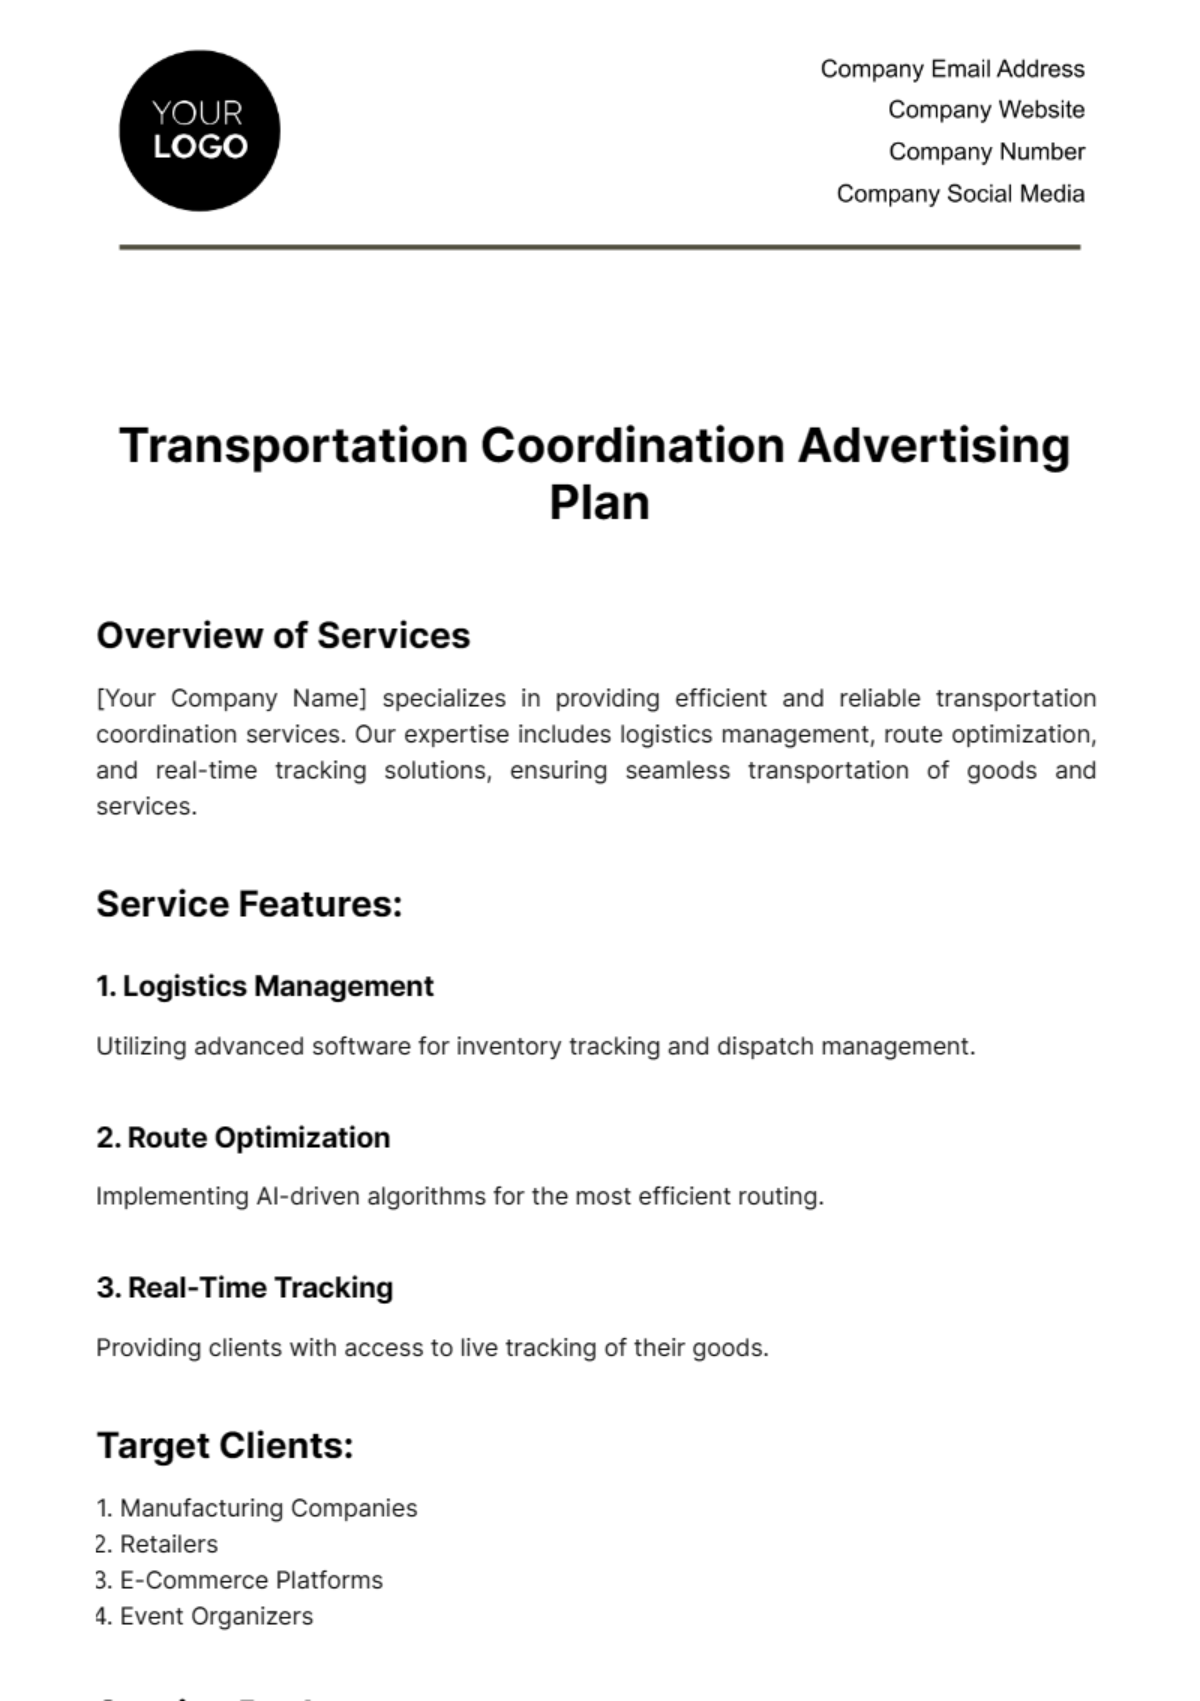 Transportation Coordination Advertising Plan Template